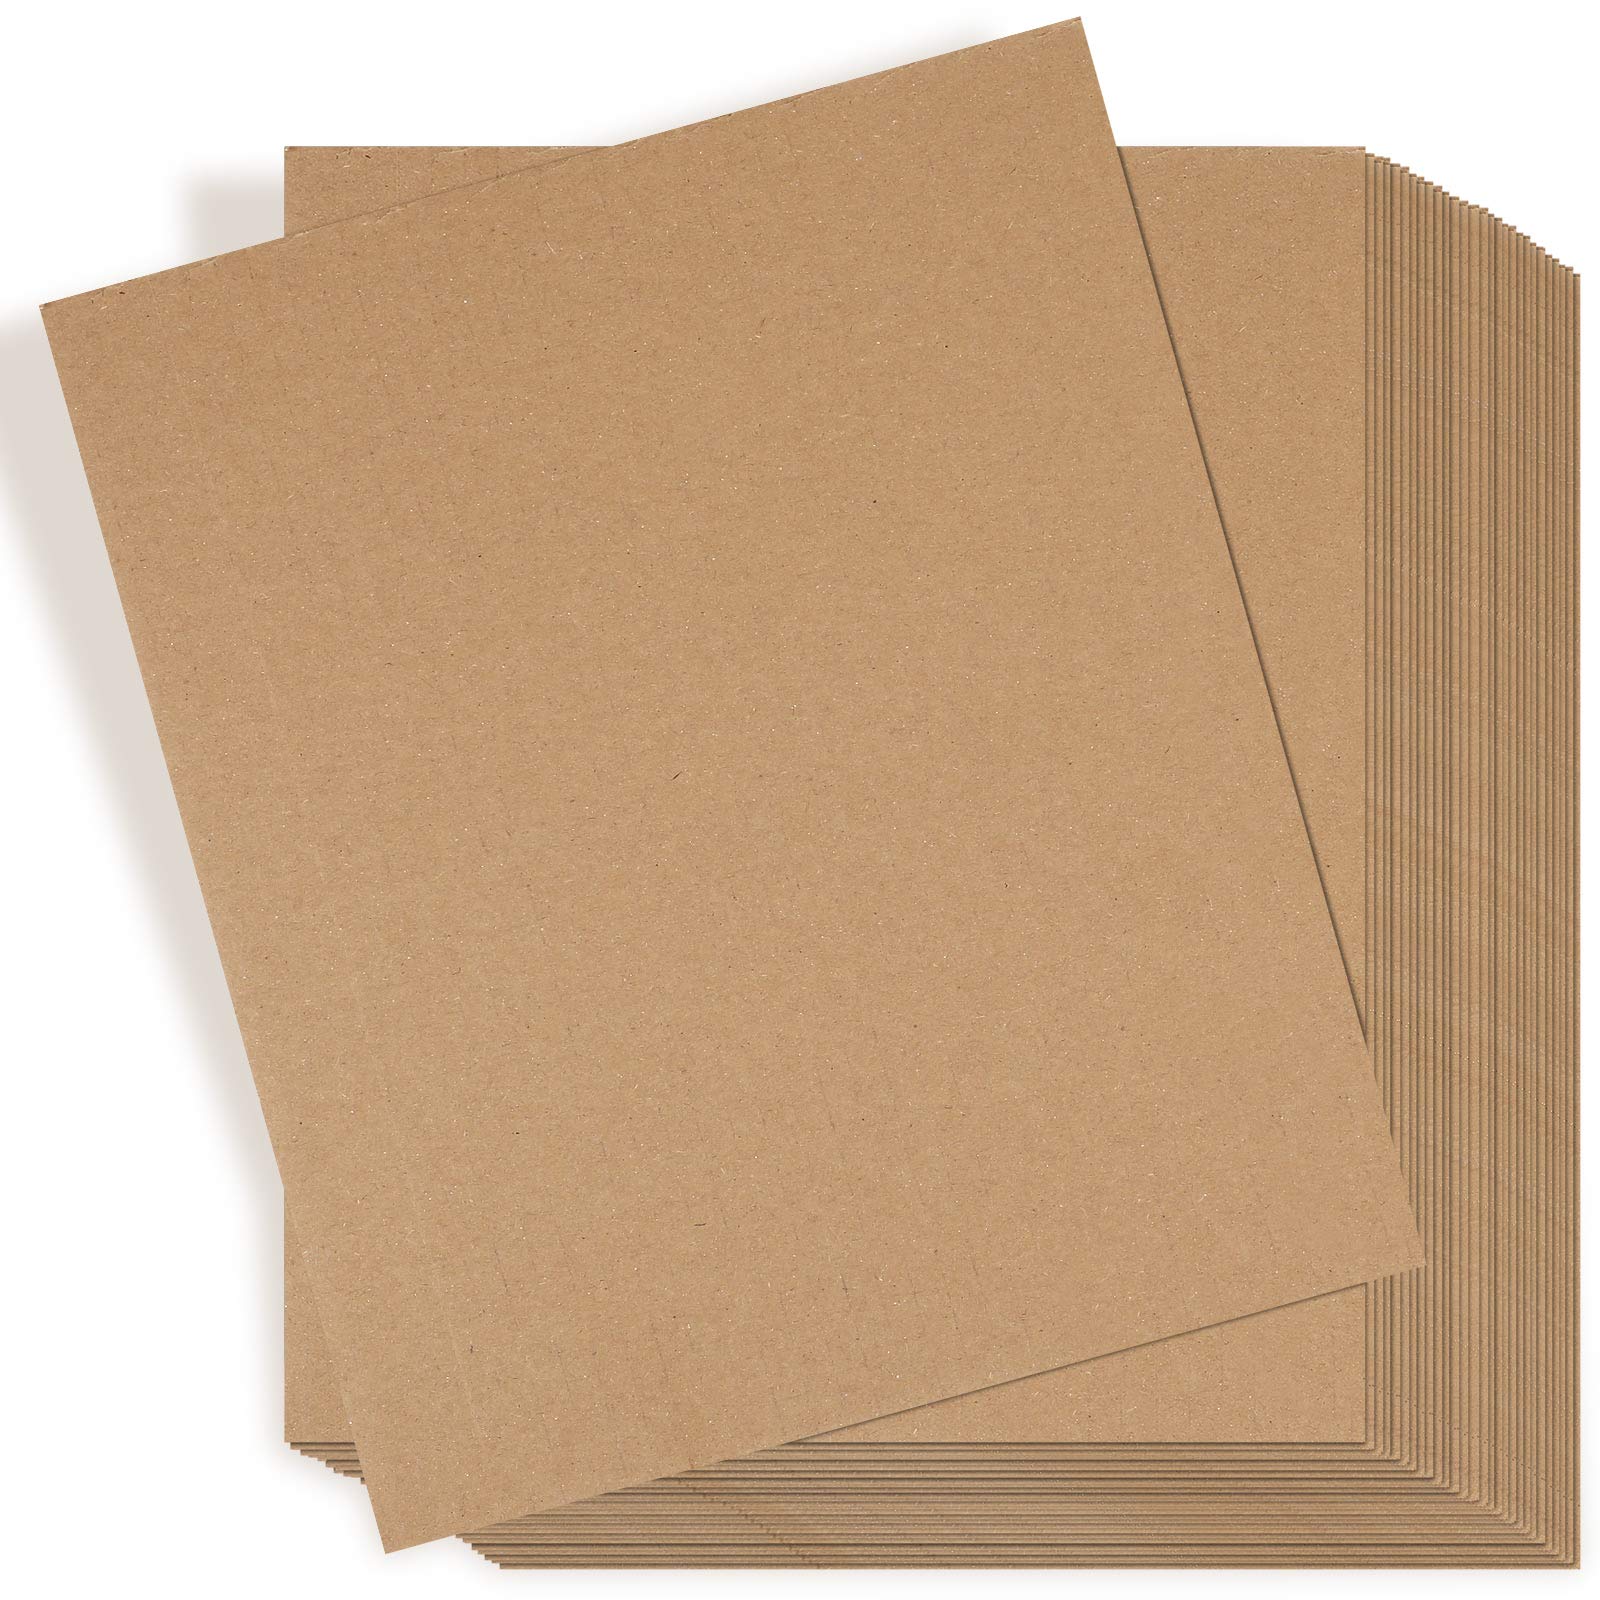 50 Pack Brown Corrugated Cardboard Sheets Flat Cardboard Sheets Cardboard  Inserts Flat Cardboard Squares Separators for